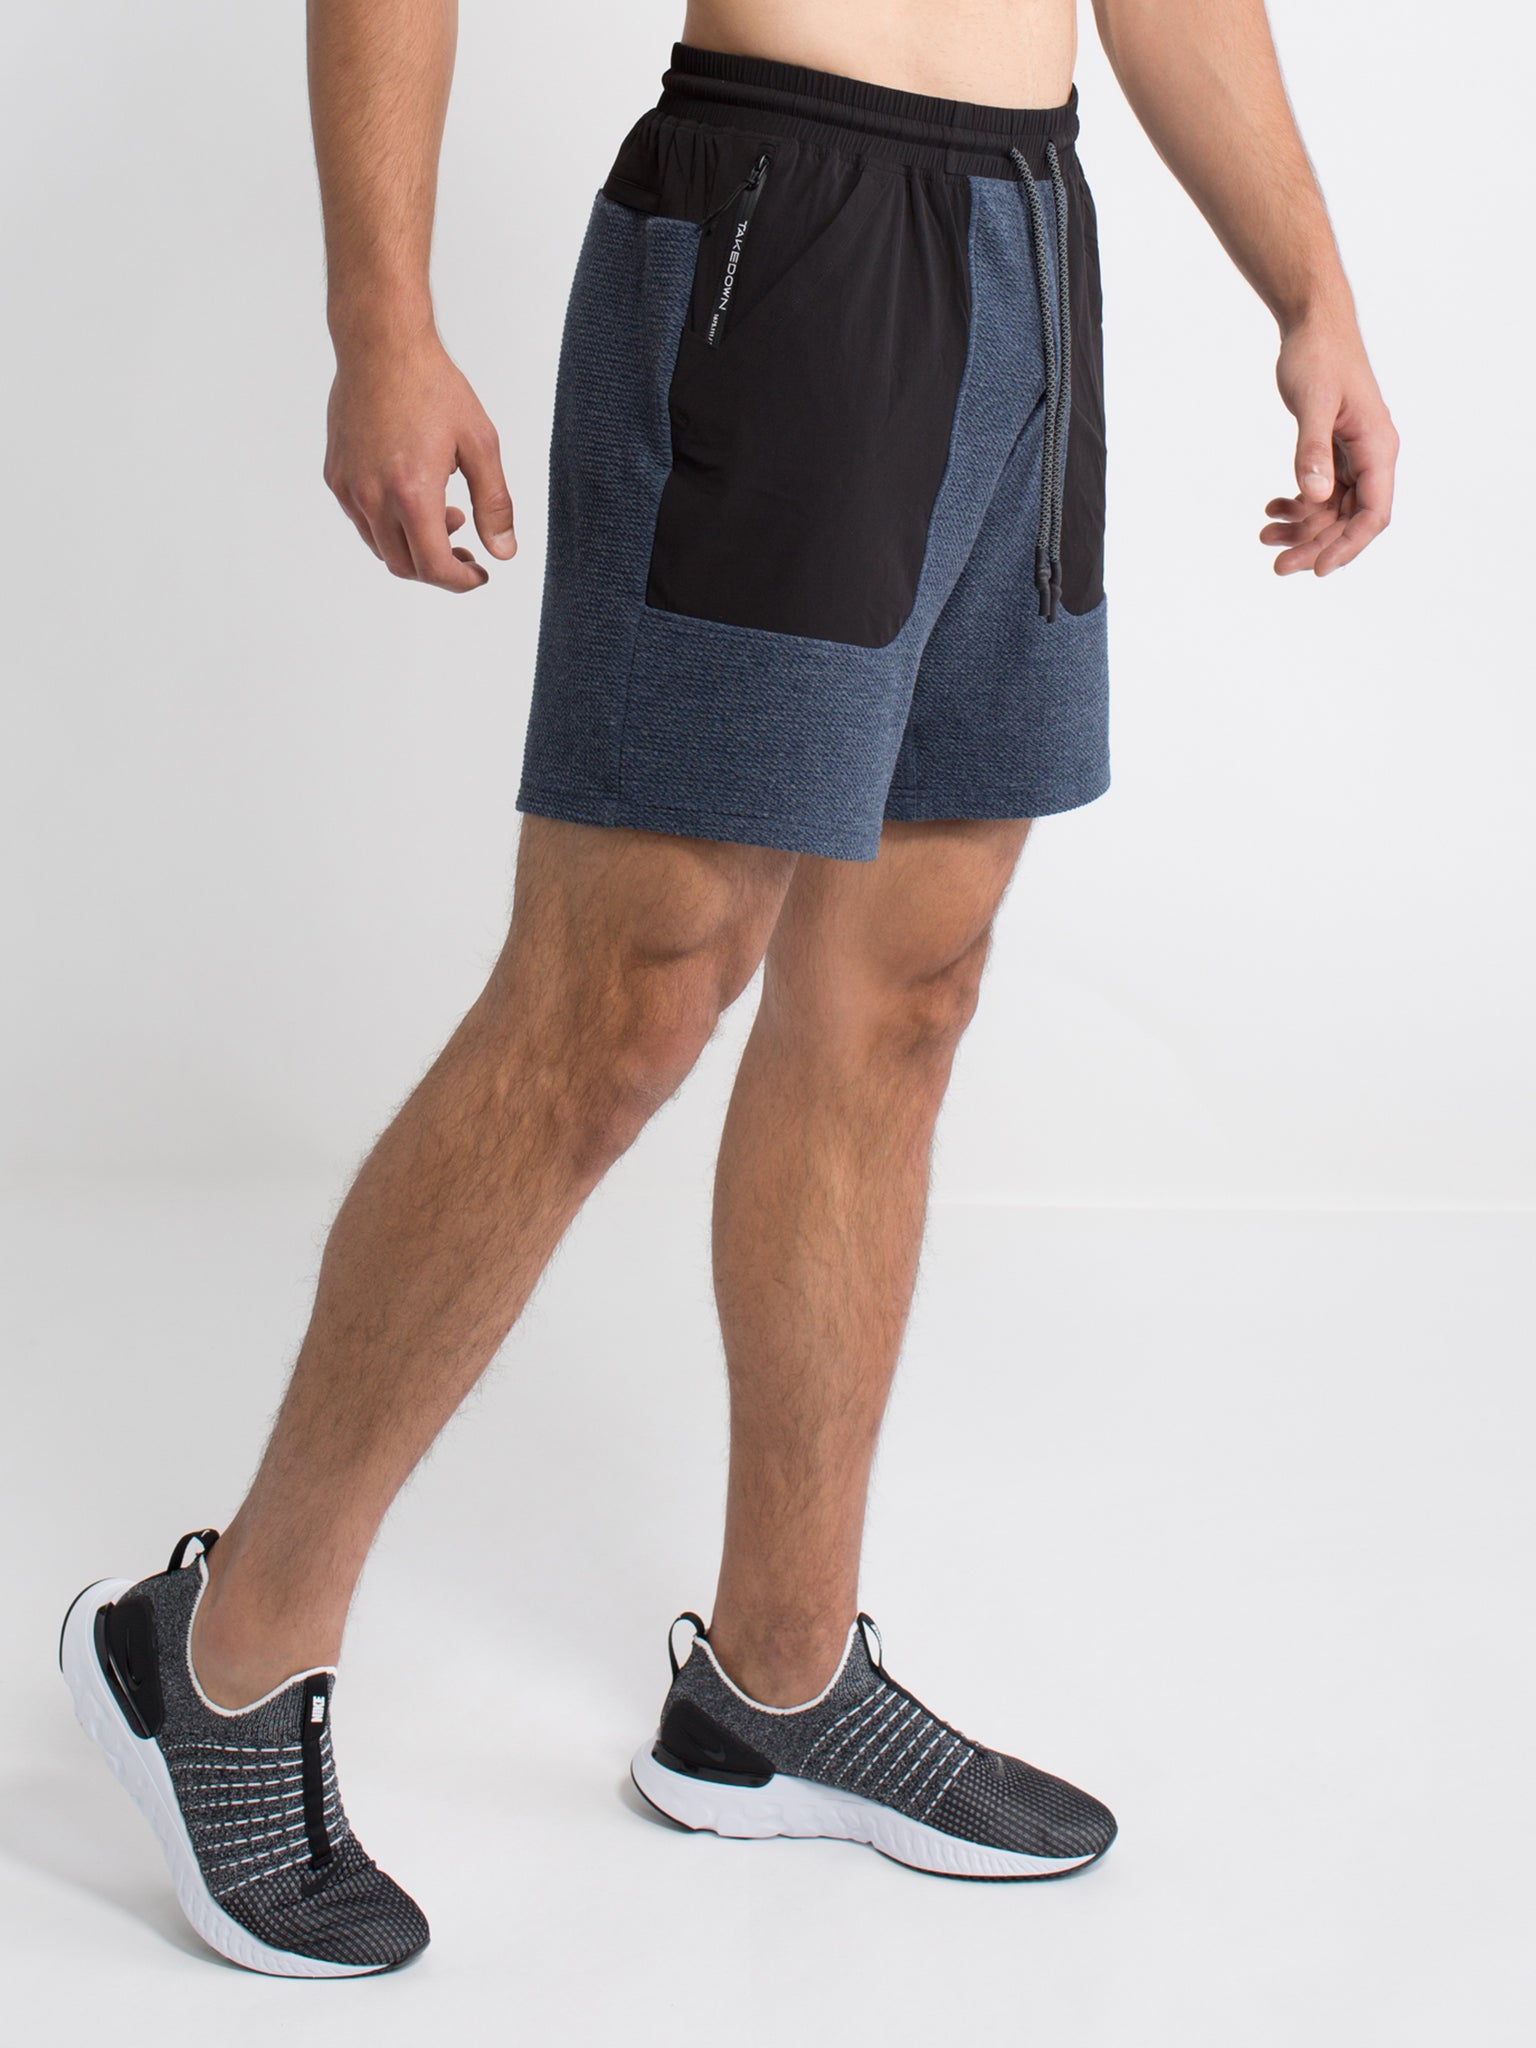 Surface Tech Shorts